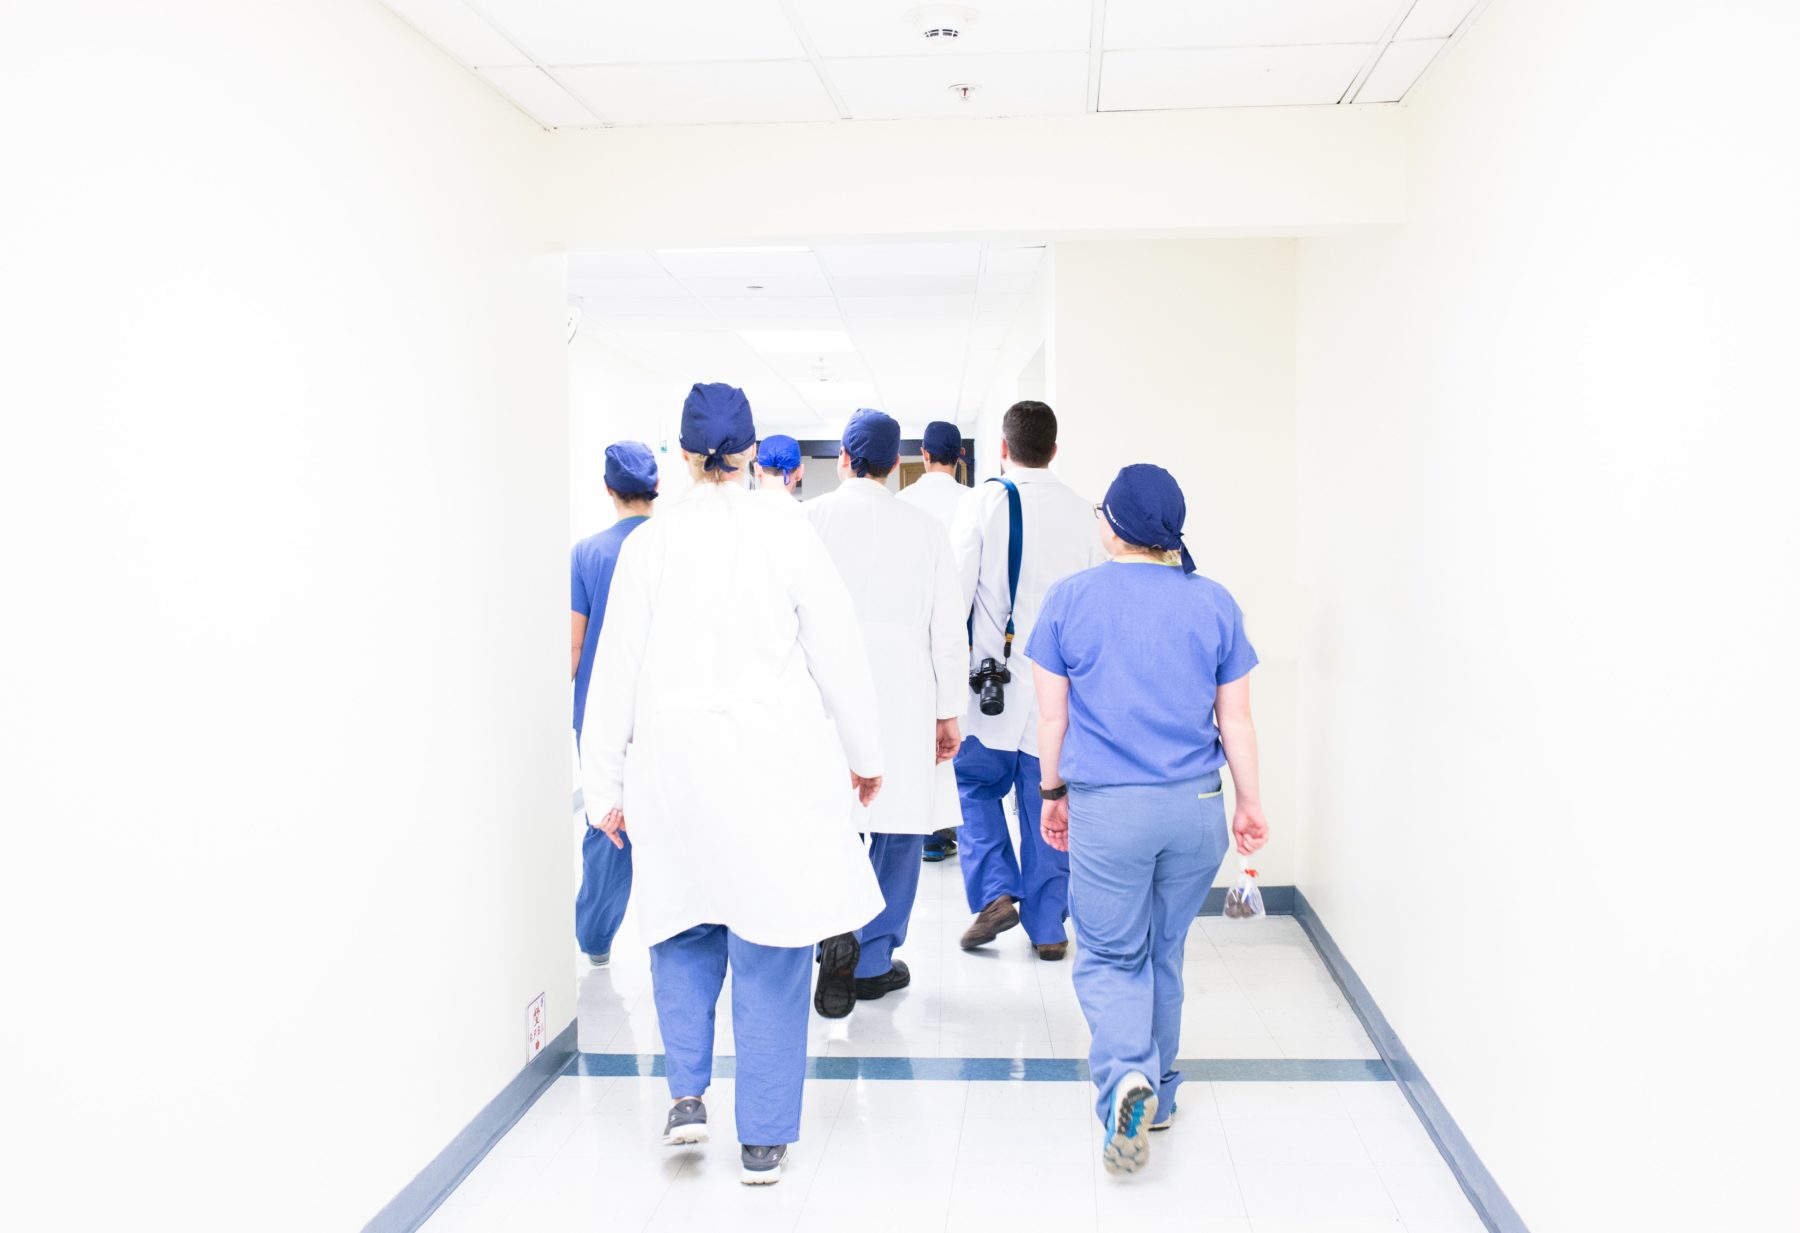 Image of doctors walking through a hallway